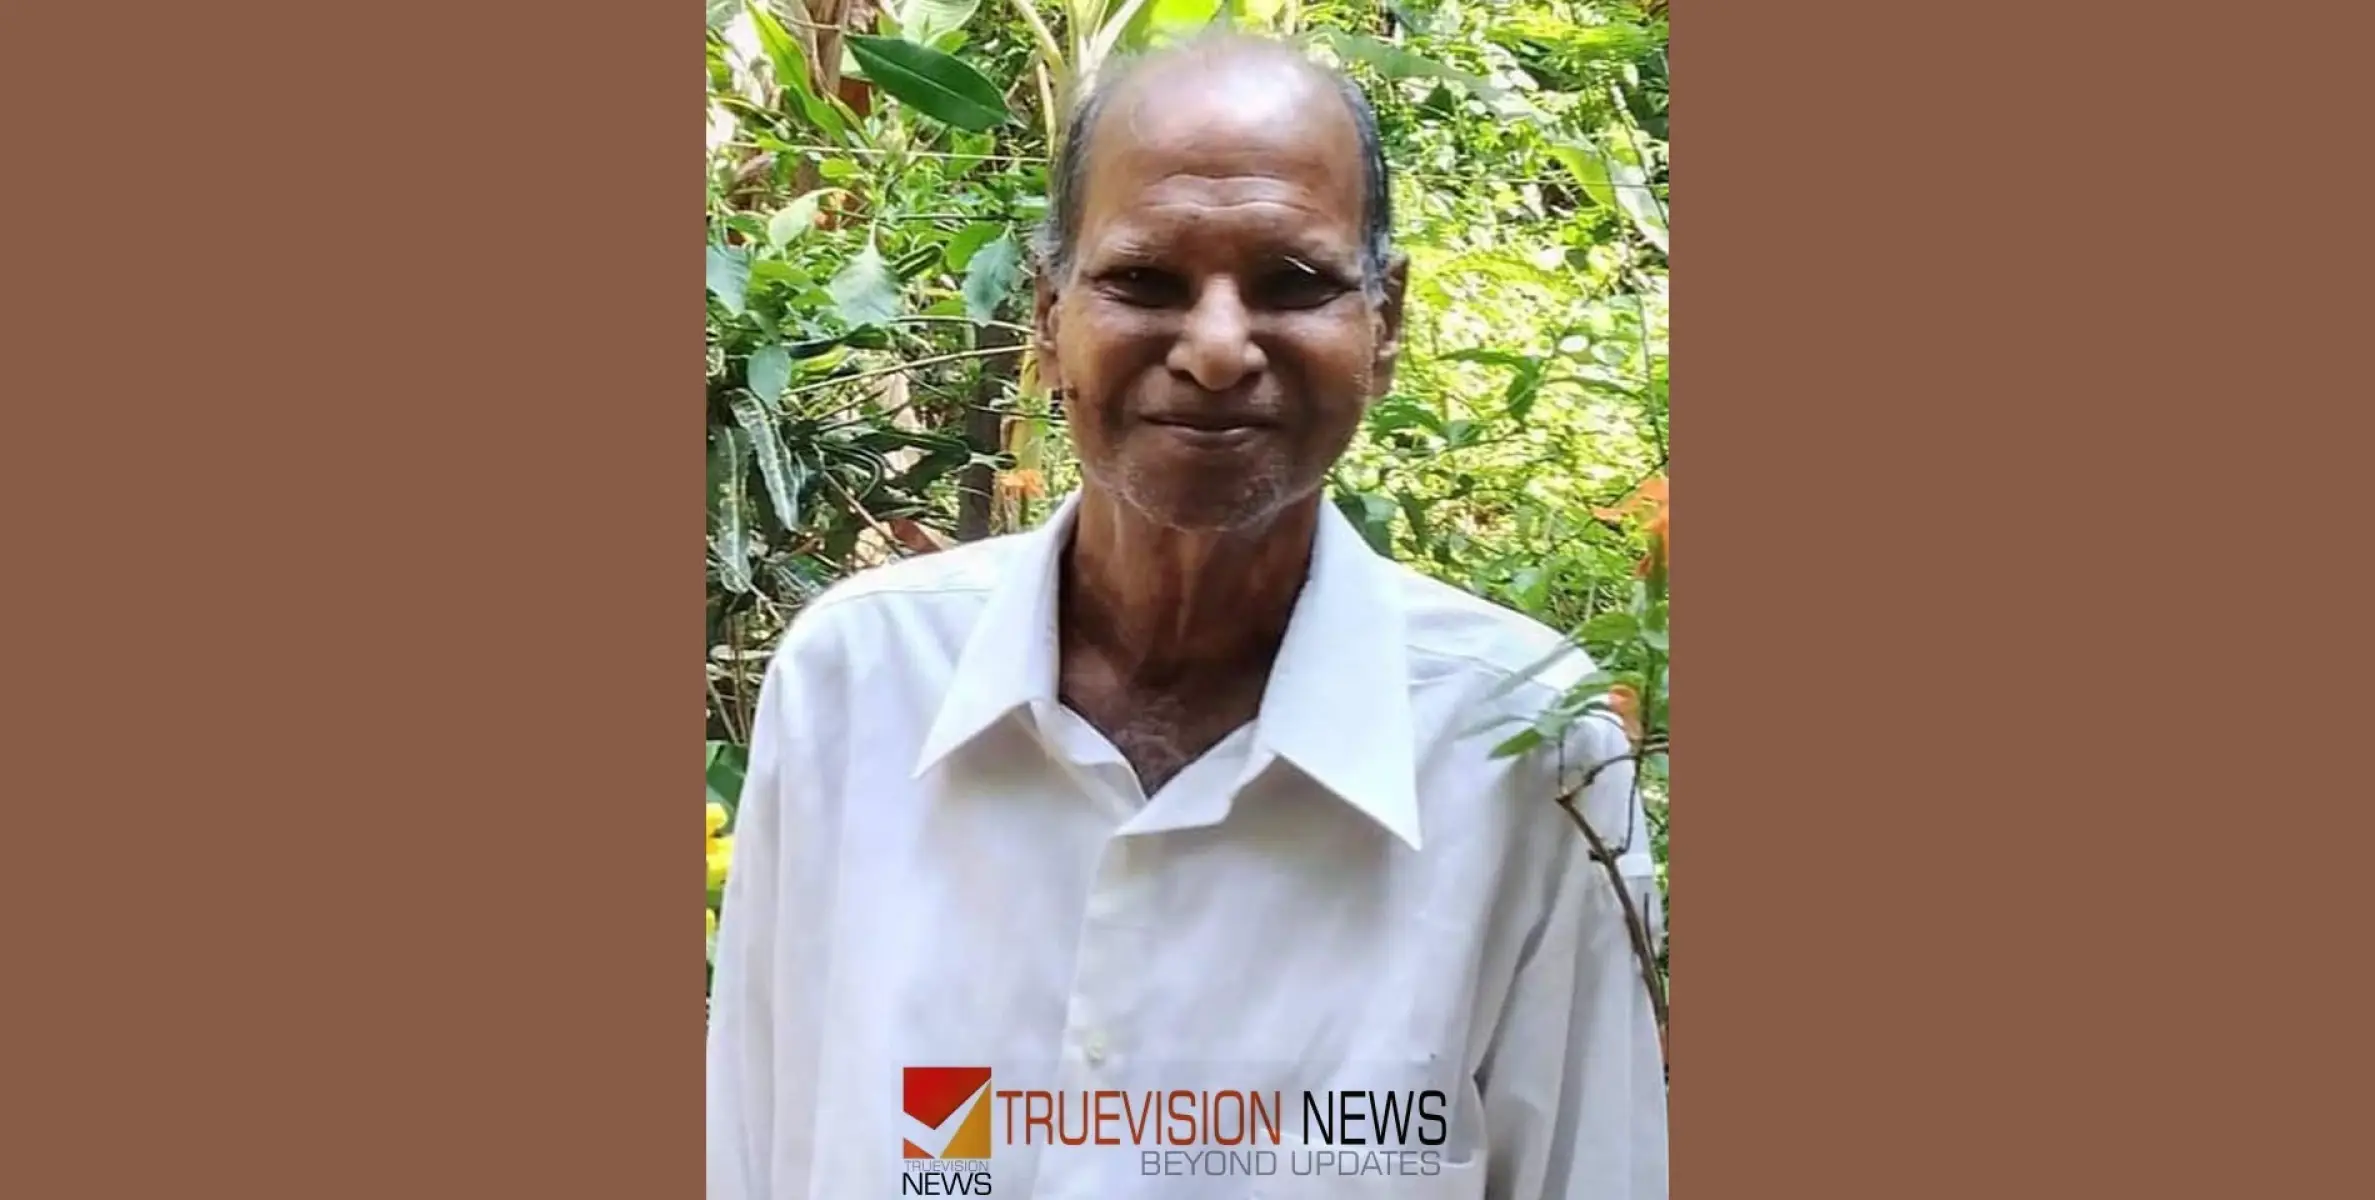 #obituary| വടകരയിലെ പ്രമുഖ പൊതു പ്രവർത്തകനും റിട്ട. എഇഒയുമായ പി. ബാലൻ മാസ്റ്റർ അന്തരിച്ചു 